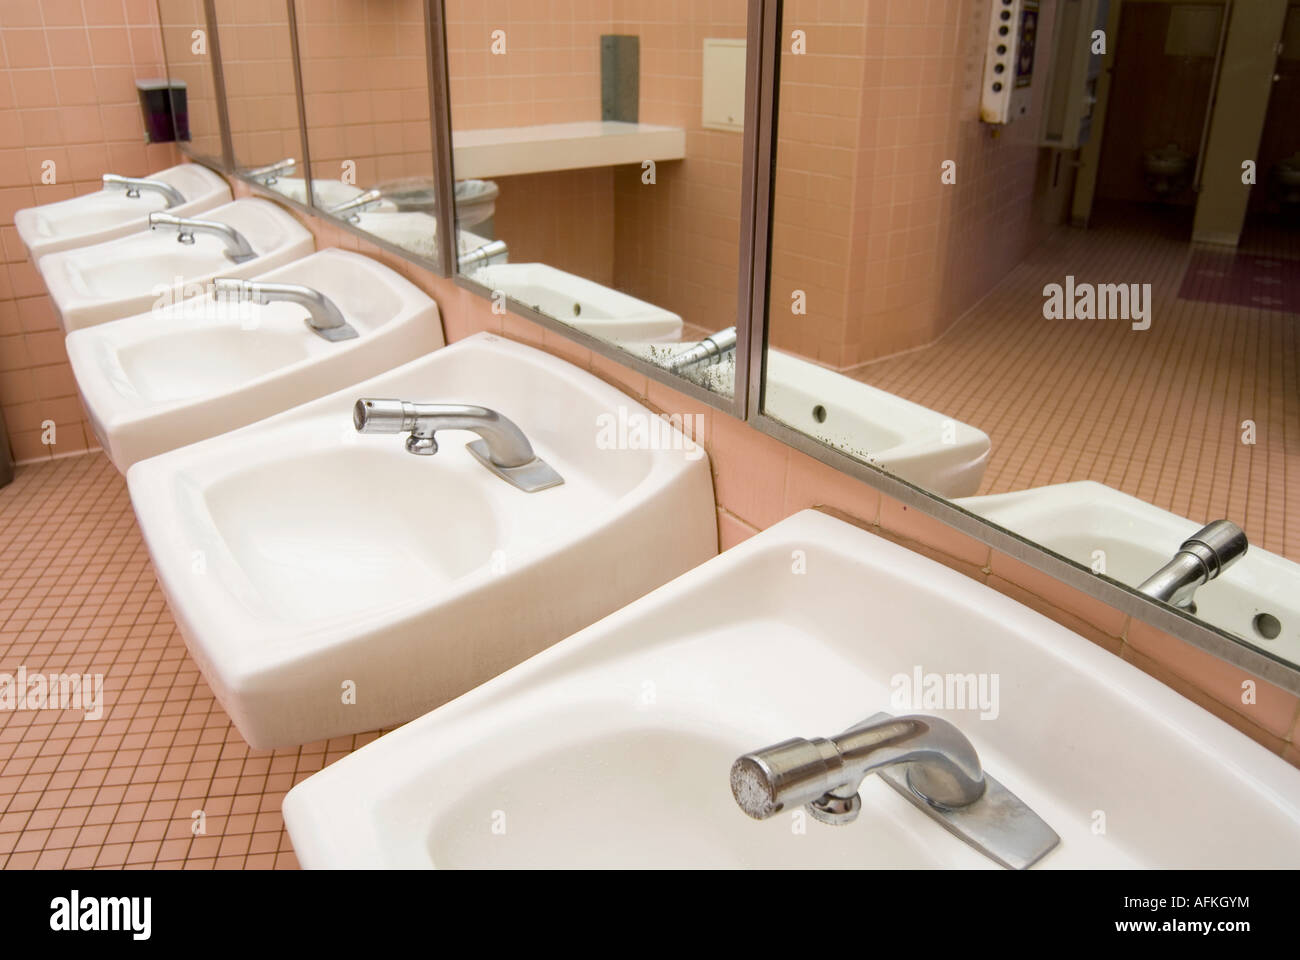 Public Restroom Sinks Stock Photo 13970311 Alamy